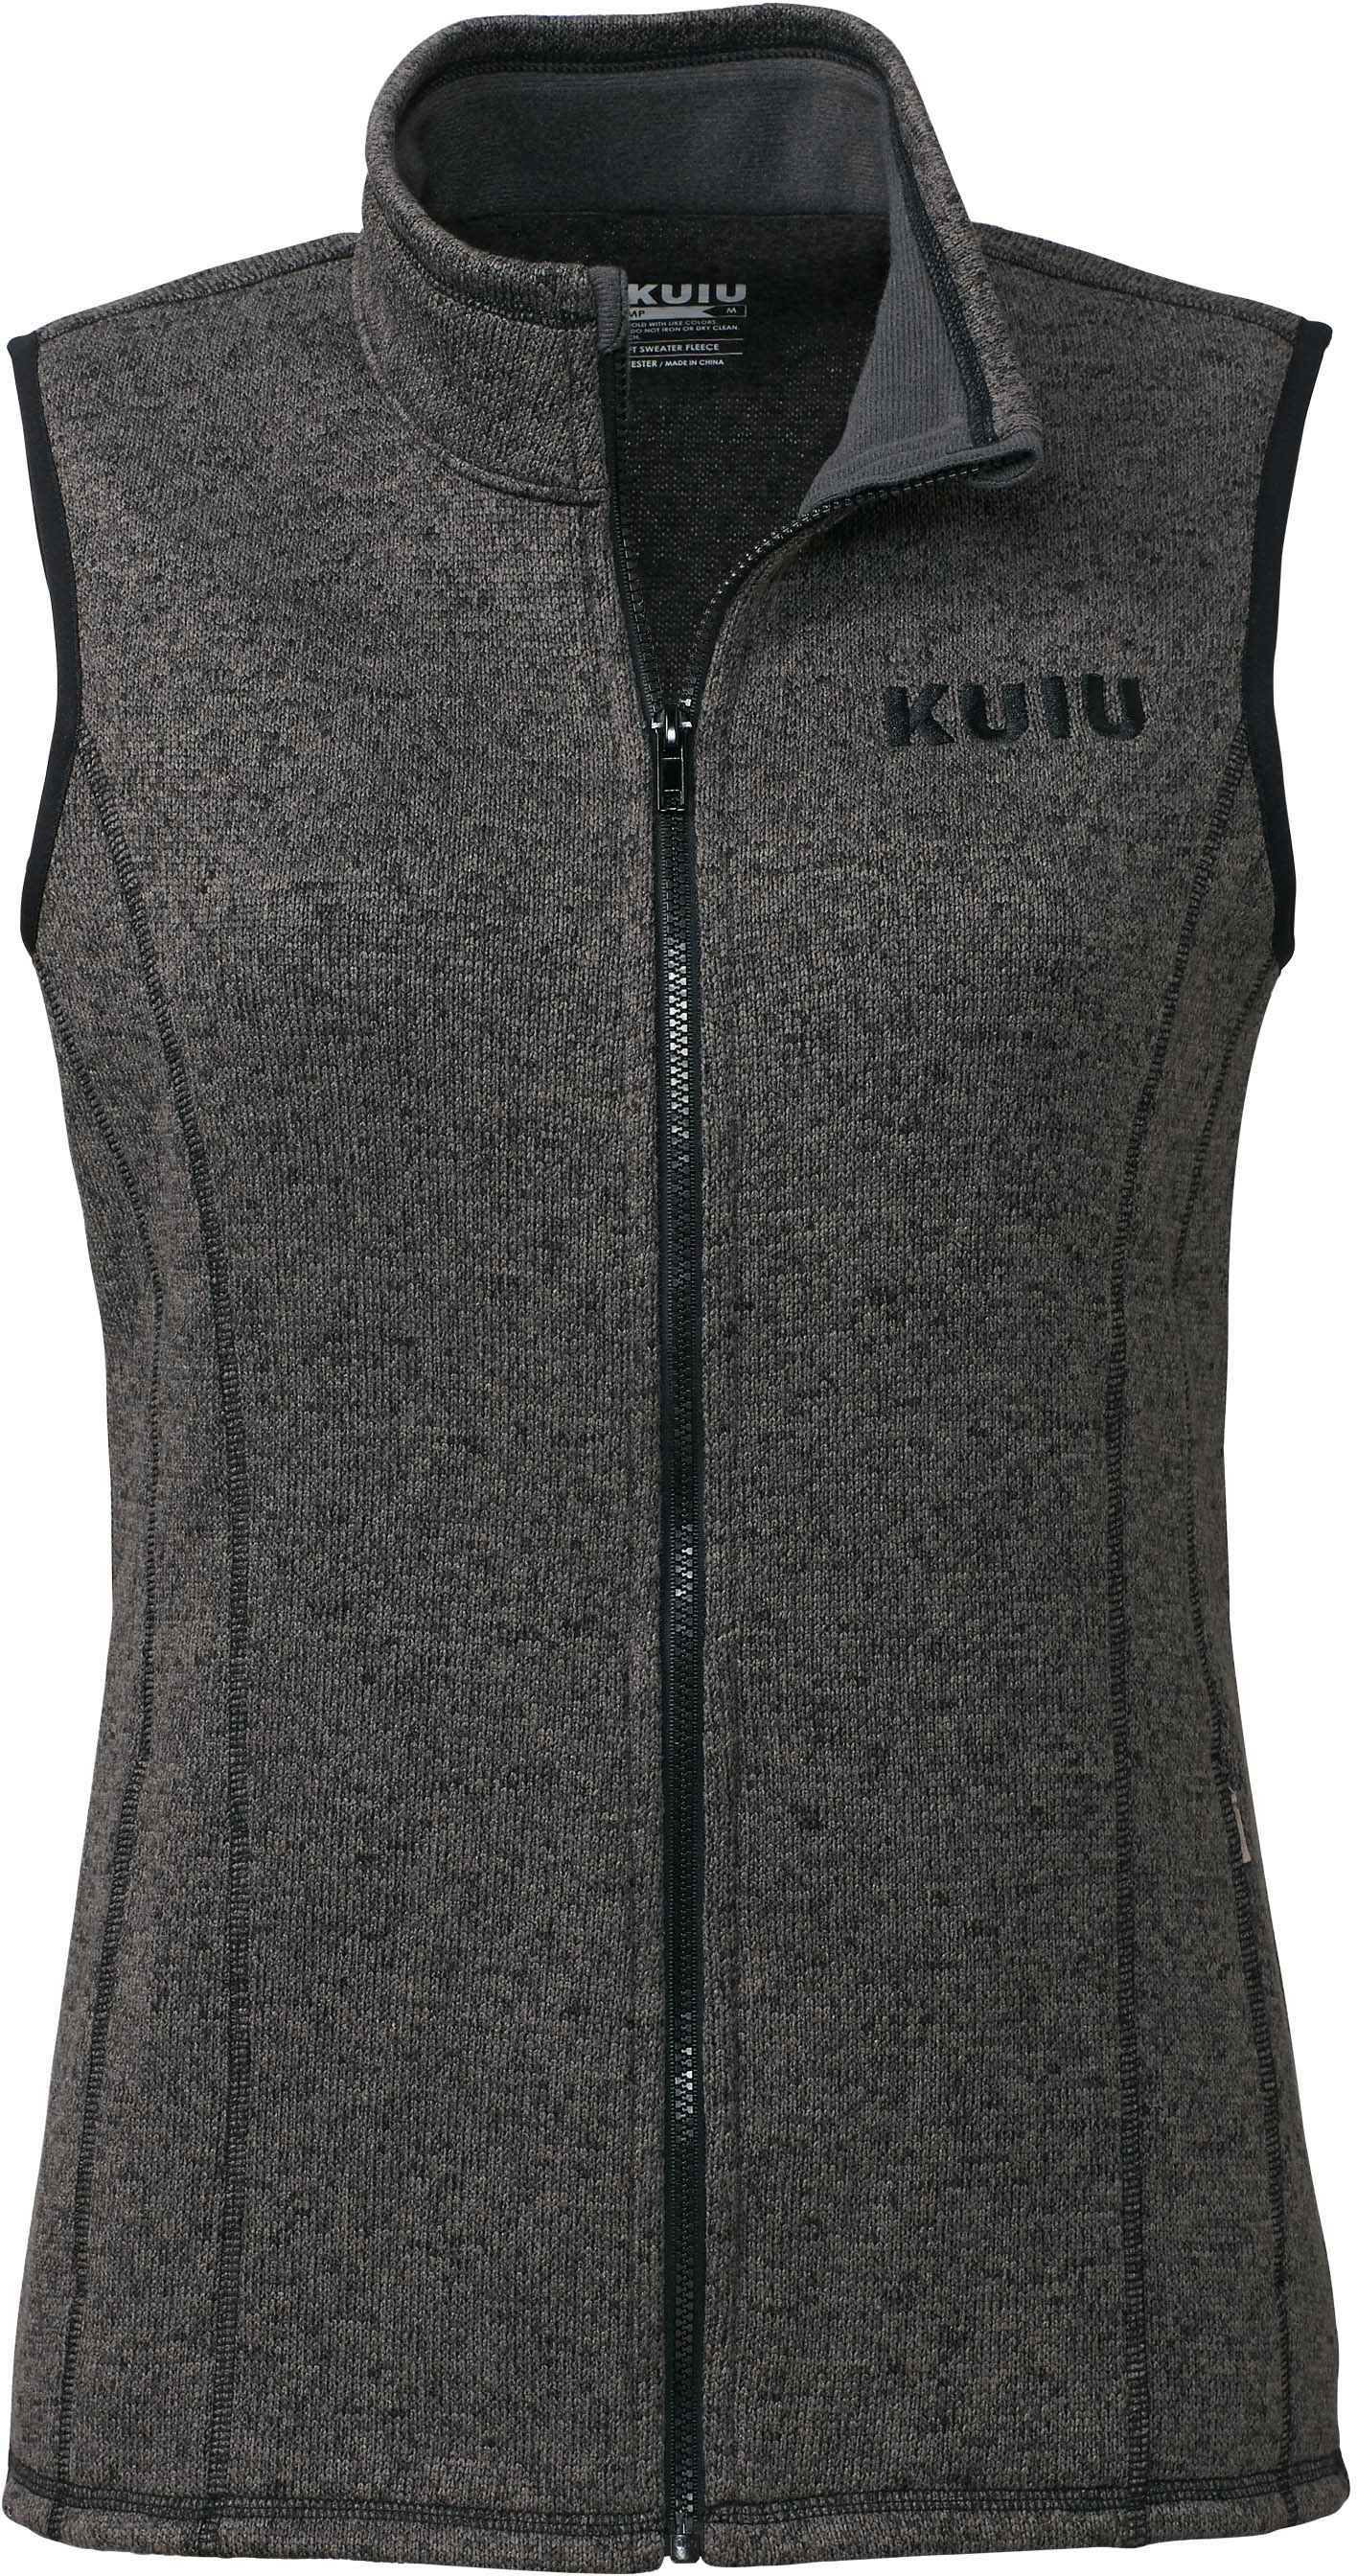 Kuiu Base Camp Sweater Vest Women's, Charcoal, XL 14036-CH-XL — CampSaver